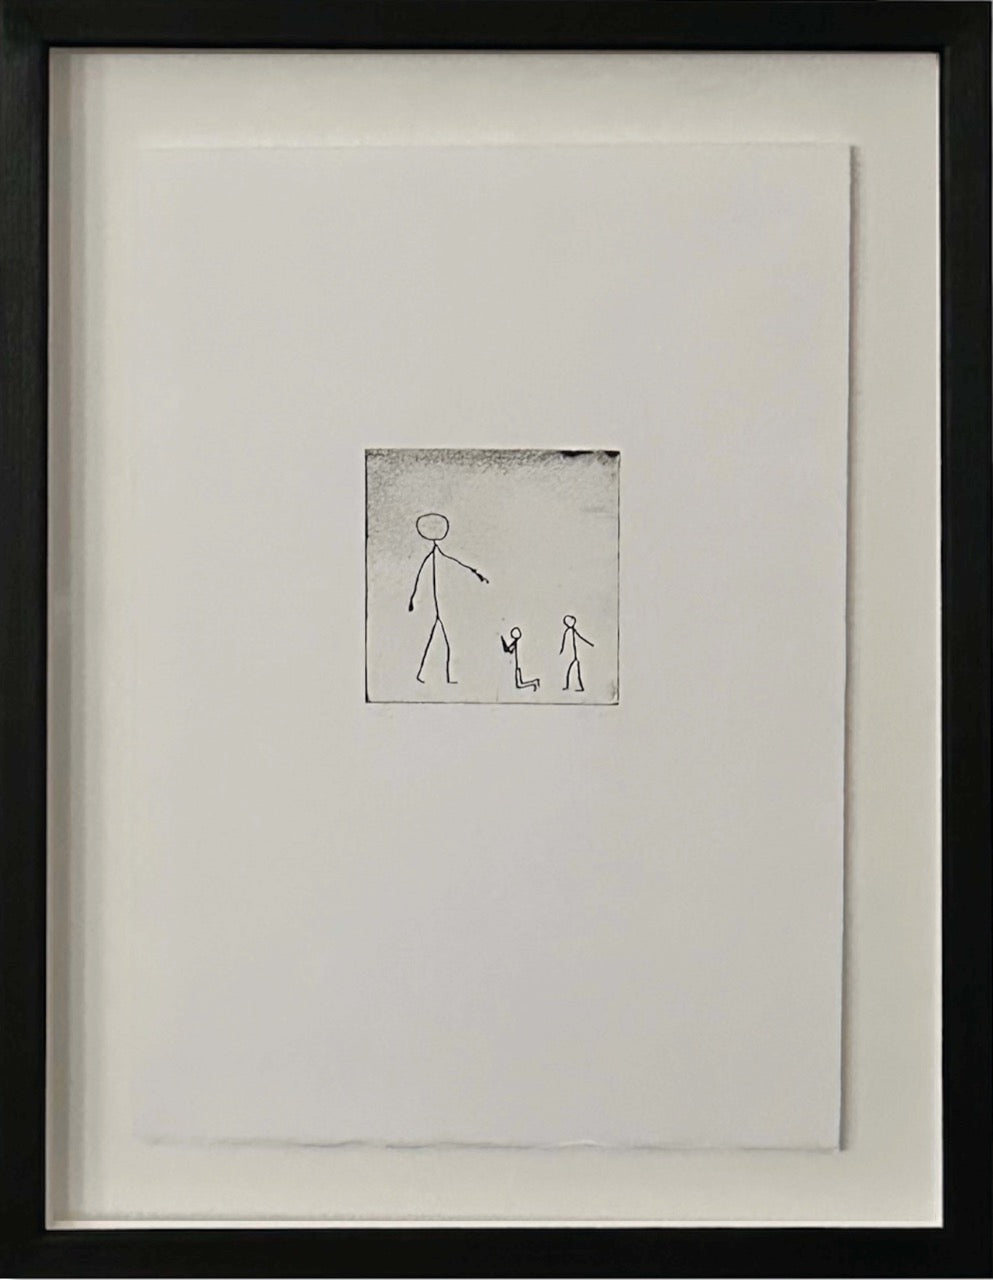 David Shrigley - Untitled (Etchings) (2005)